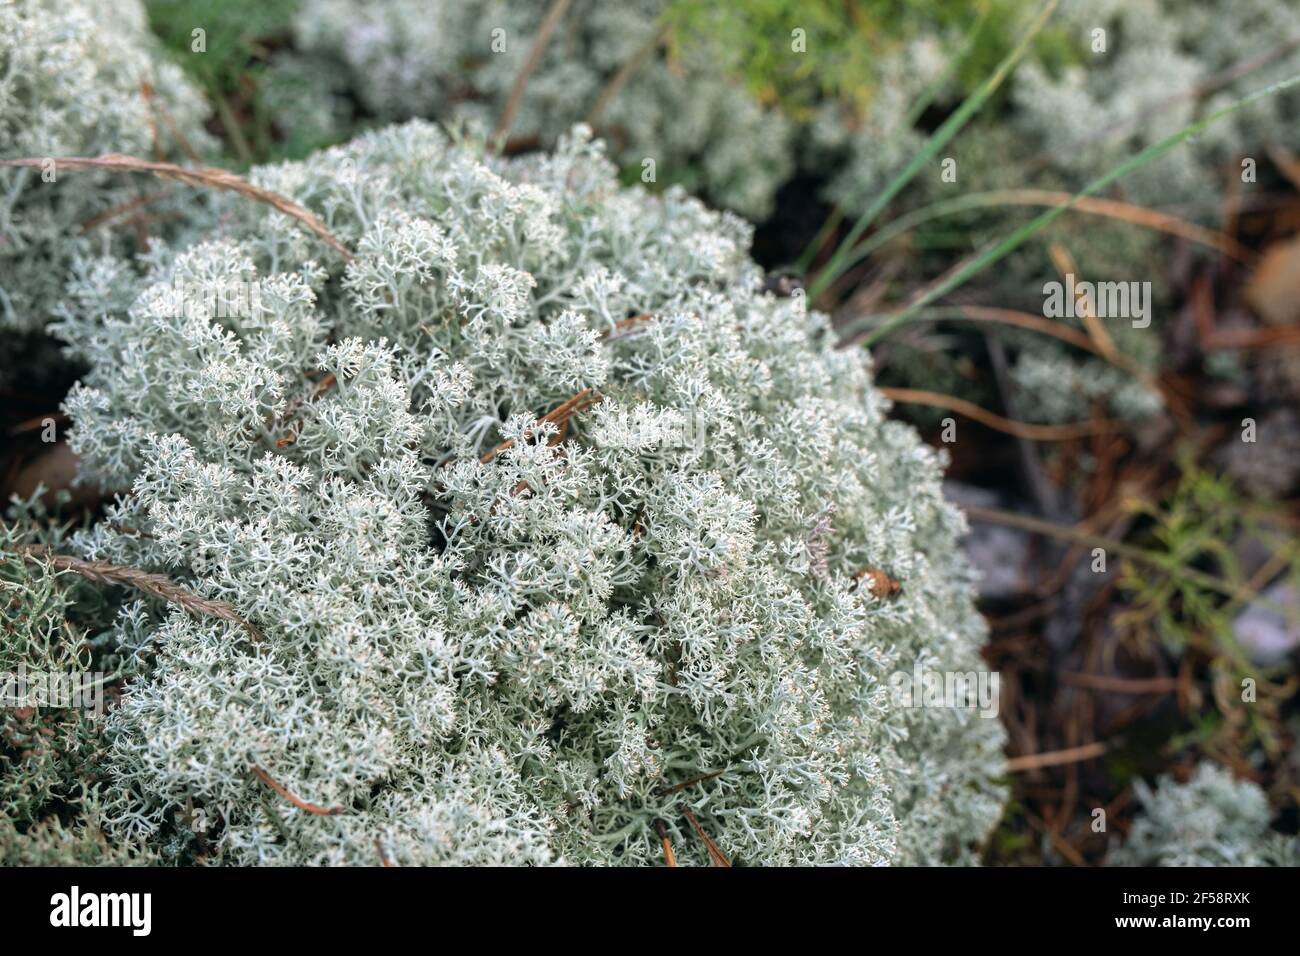 macro photo of deer Iceland moss or Cetraria islandica bush, selective focus. Herbal medicine. Stock Photo